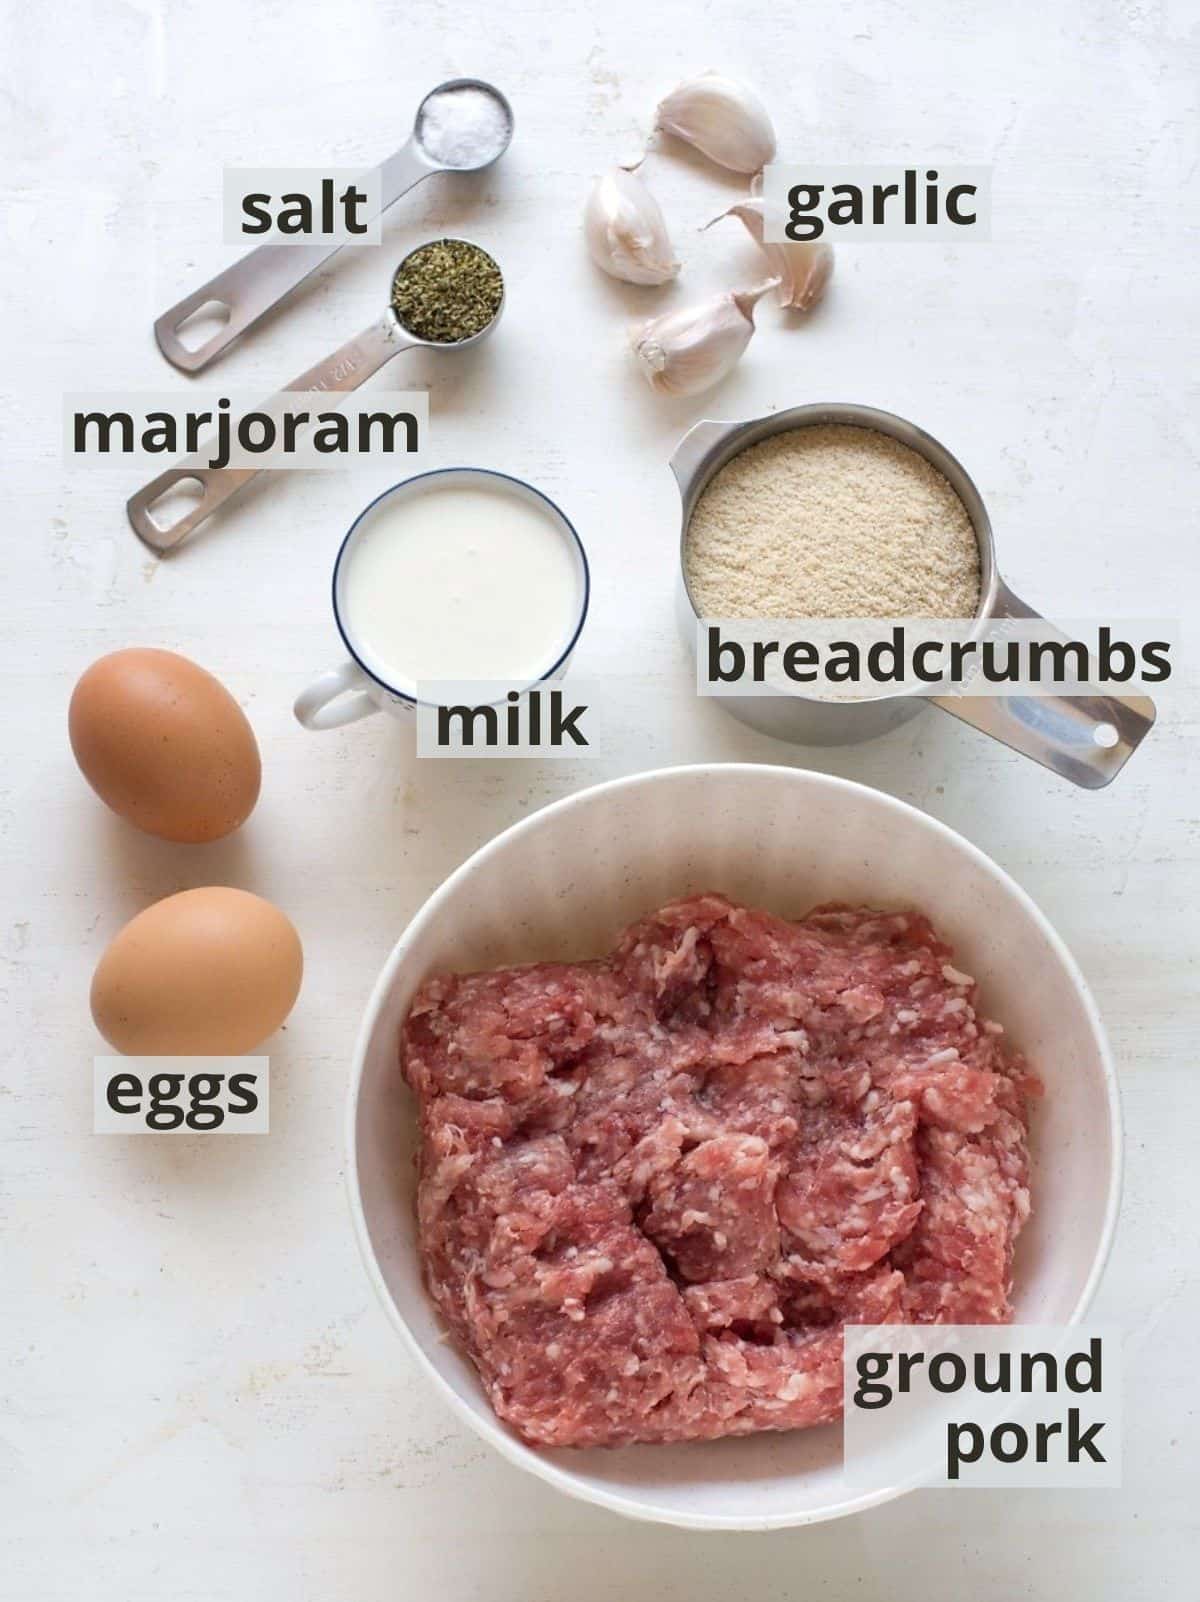 Pork meatloaf ingredients with captions.